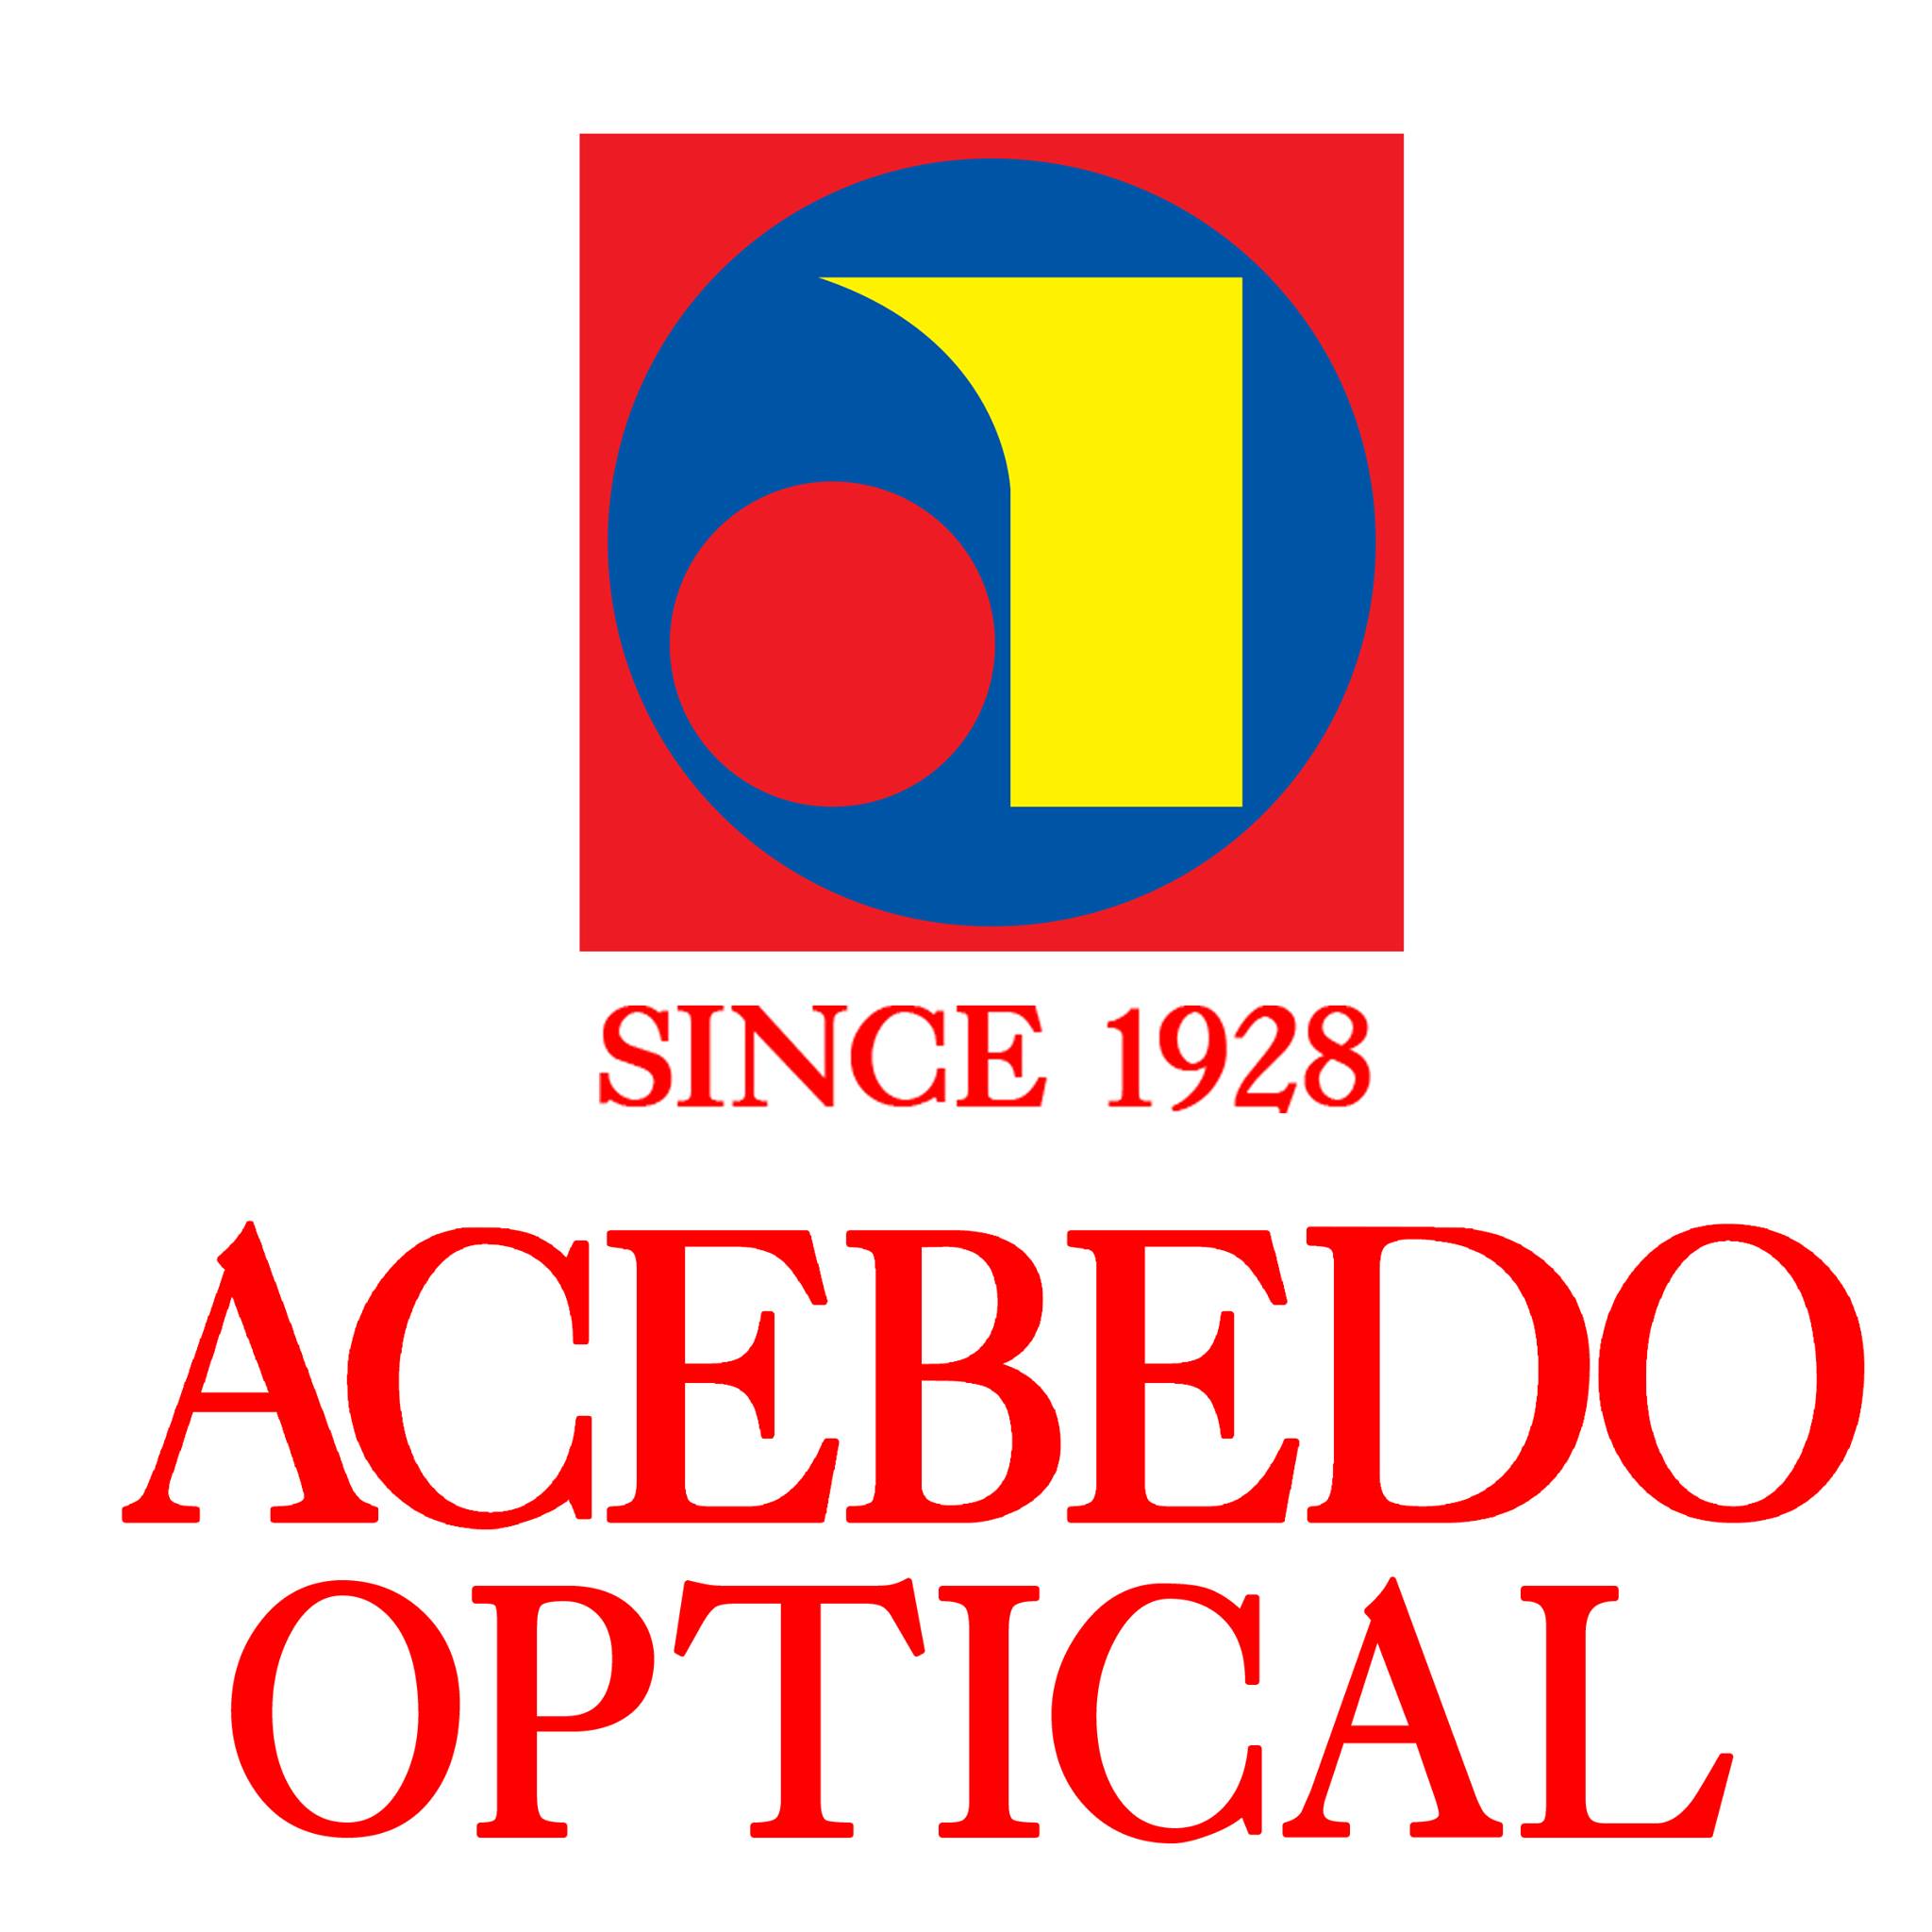 Acebdo Optical